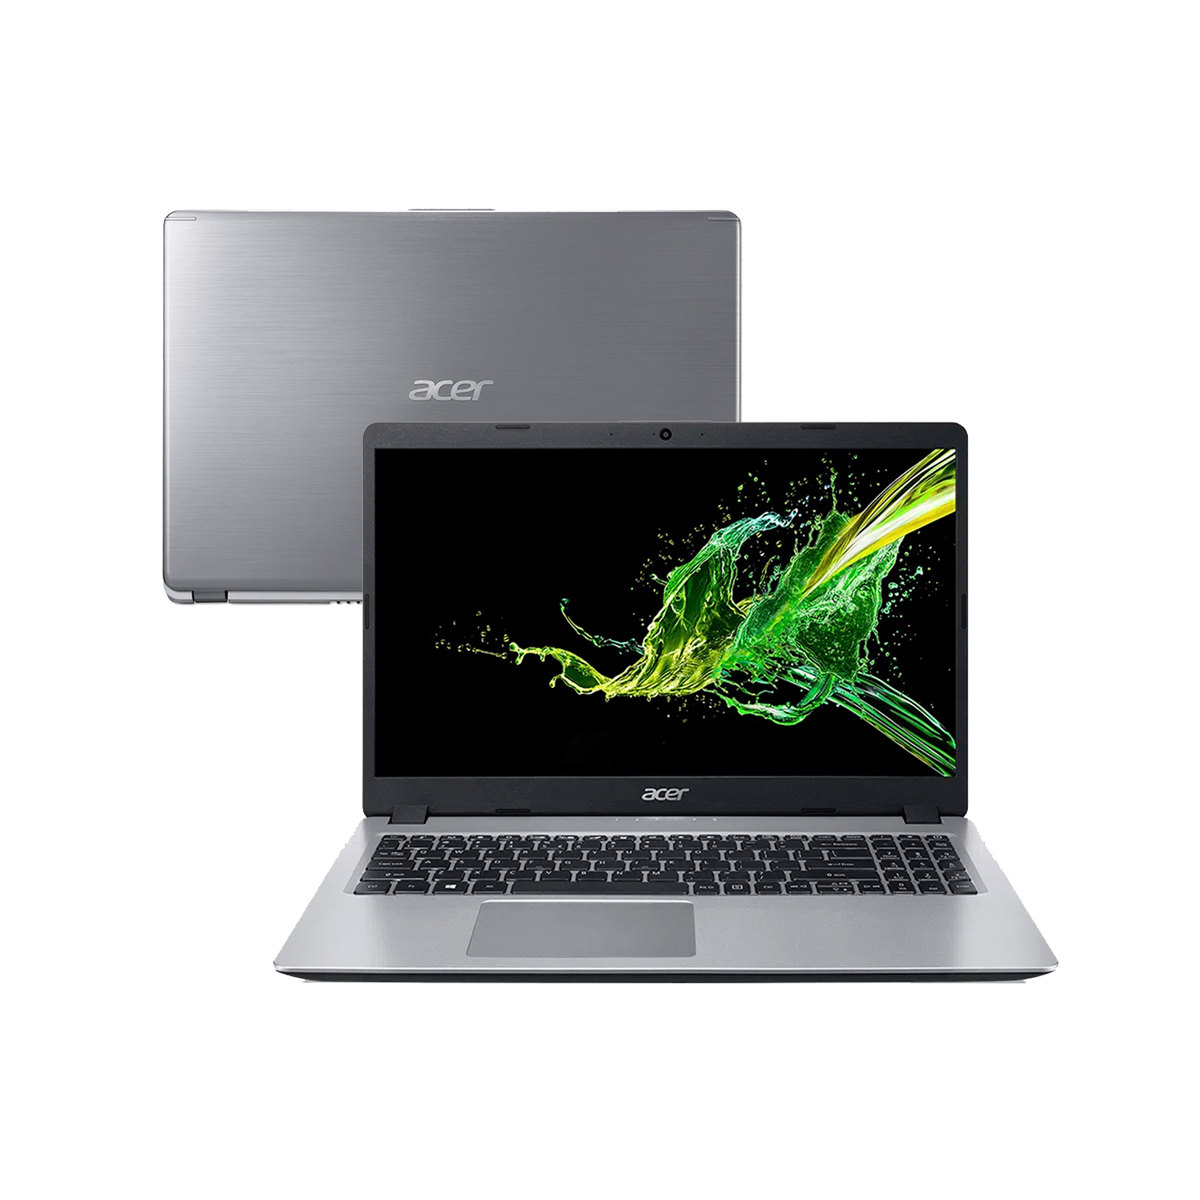 Notebook Acer A515 Core I5 8265u Memoria 4gb Ddr4 Ssd 240gb Tela 15.6' Led Hd Sistema Windows 10 Home